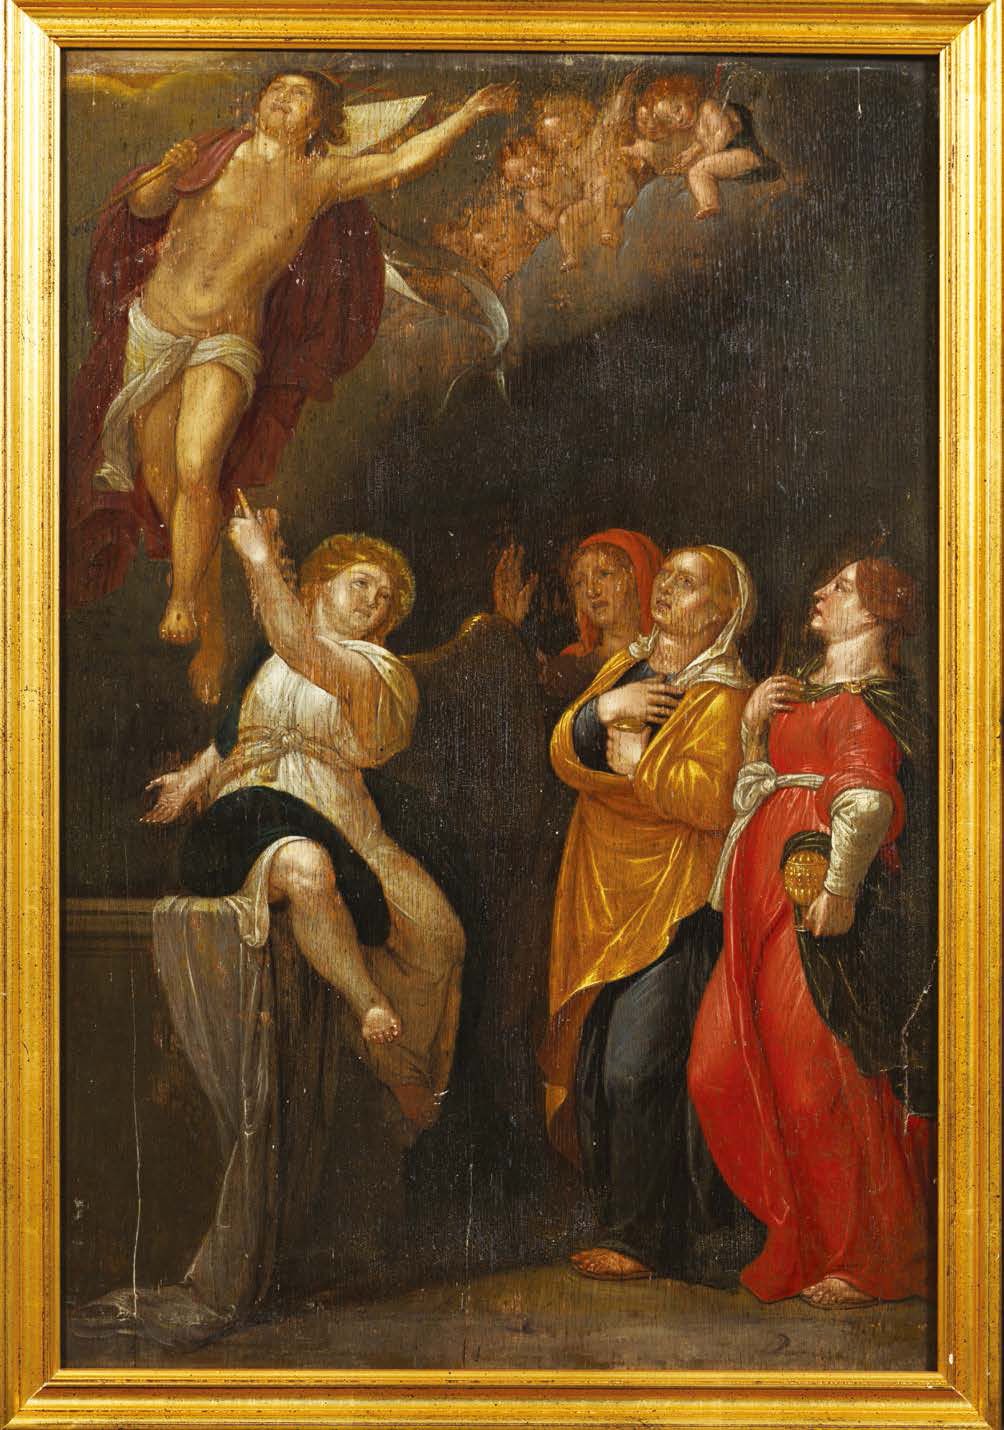 École ANVERSOISE du XVIIe siècle 墓旁的三位圣母和天使
橡木板，一块板，没有镶边。穿着。
H_53 cm W_35 cm